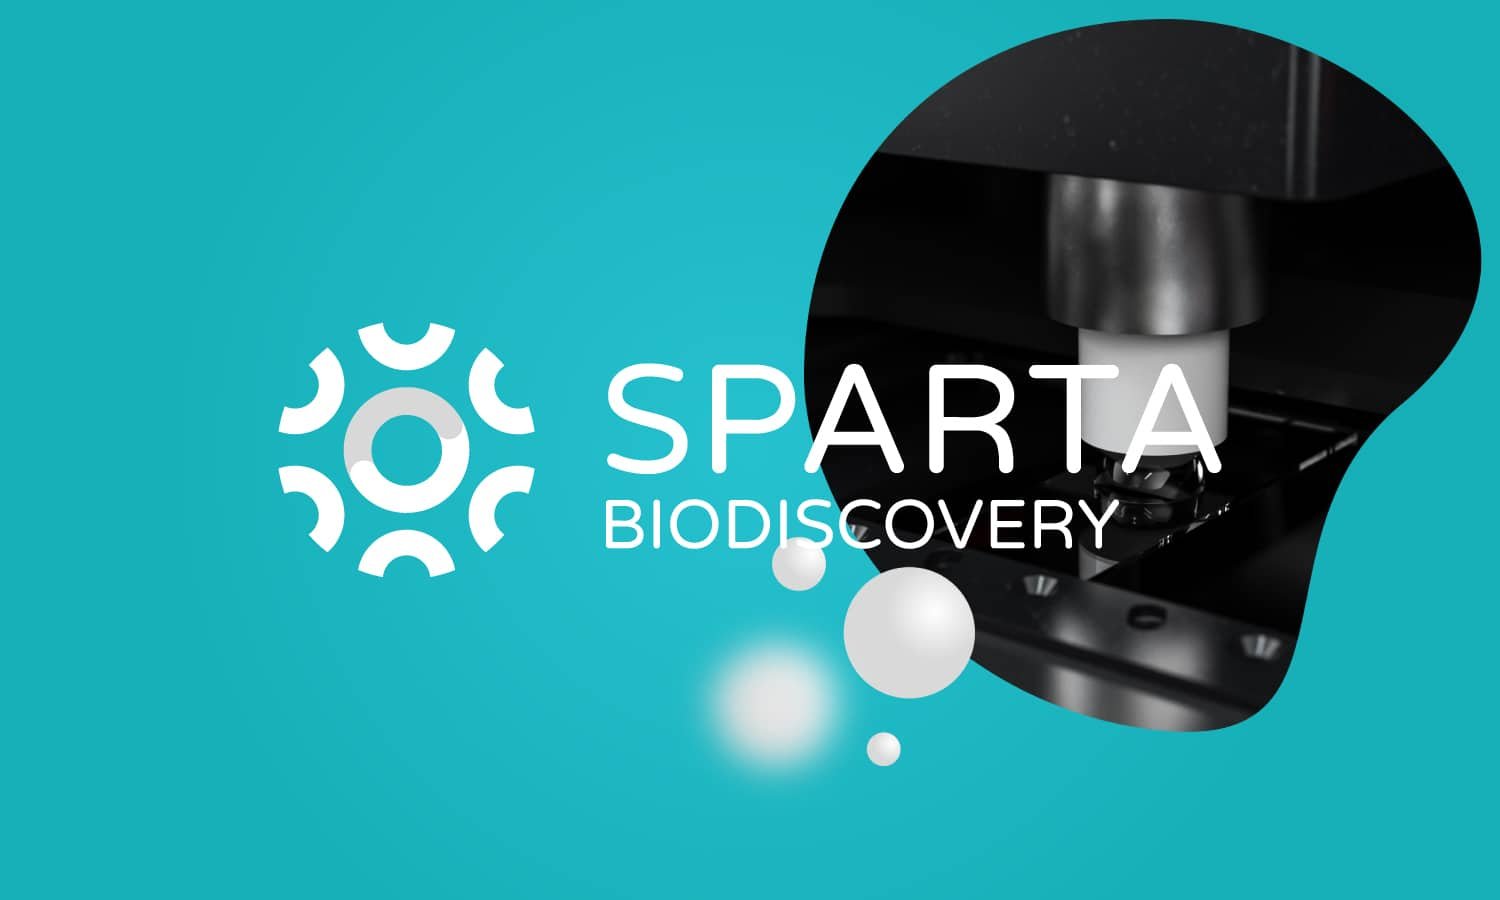 SPARTA Biodiscovery SmartaStudio